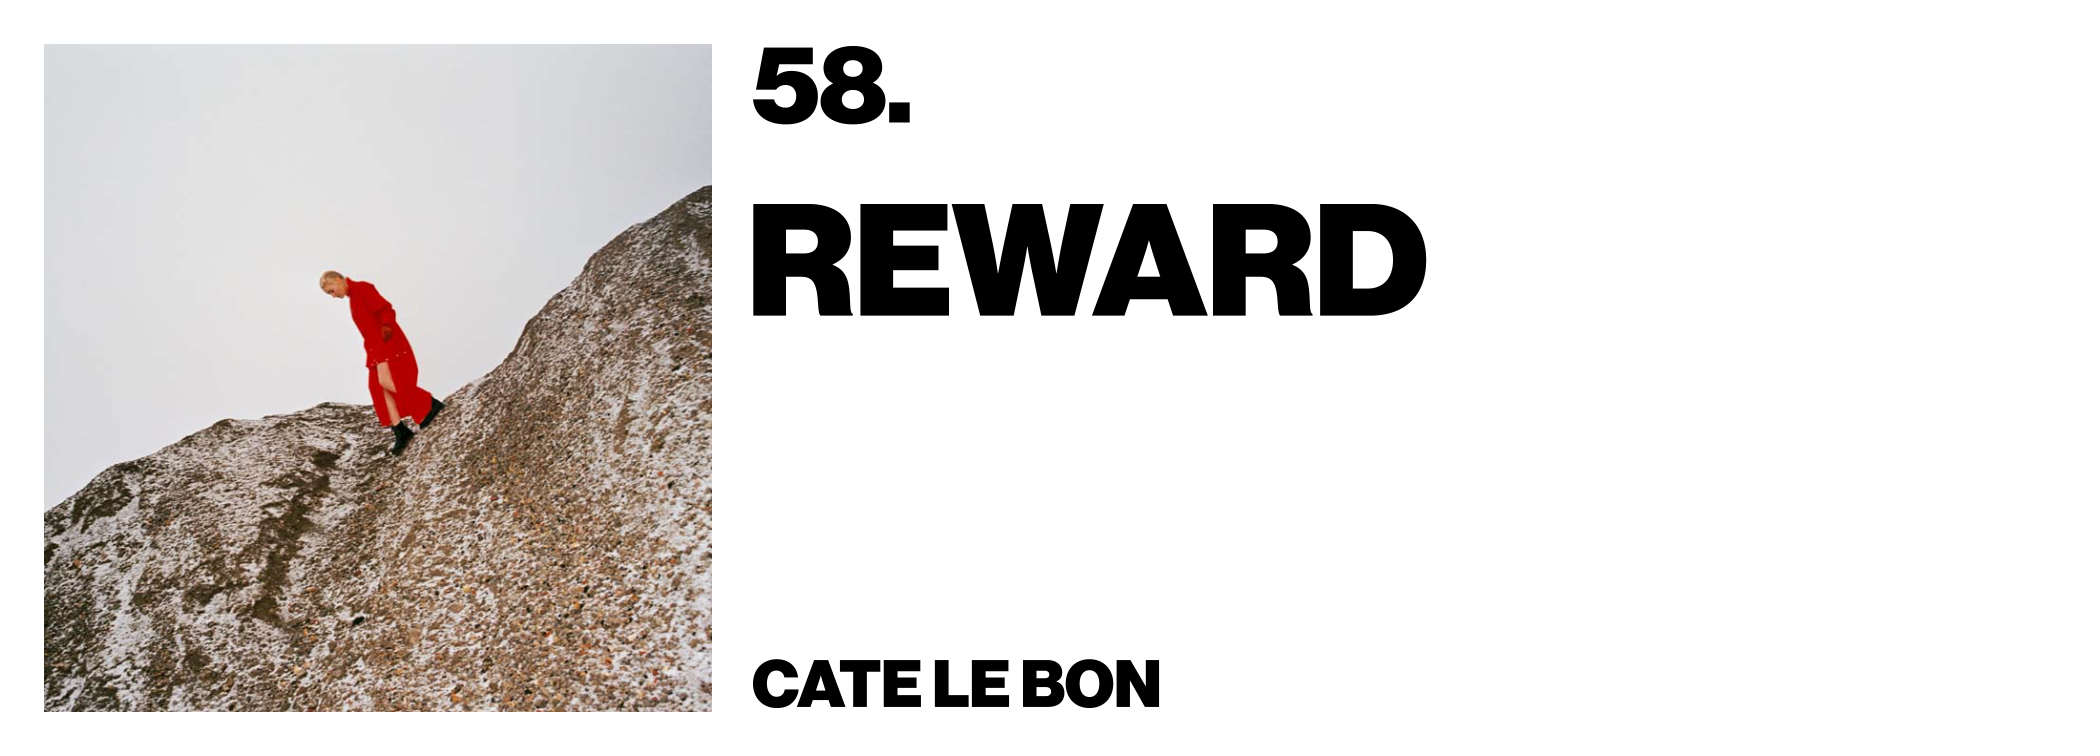 1575928086324-58-Cate-Le-Bon-Reward